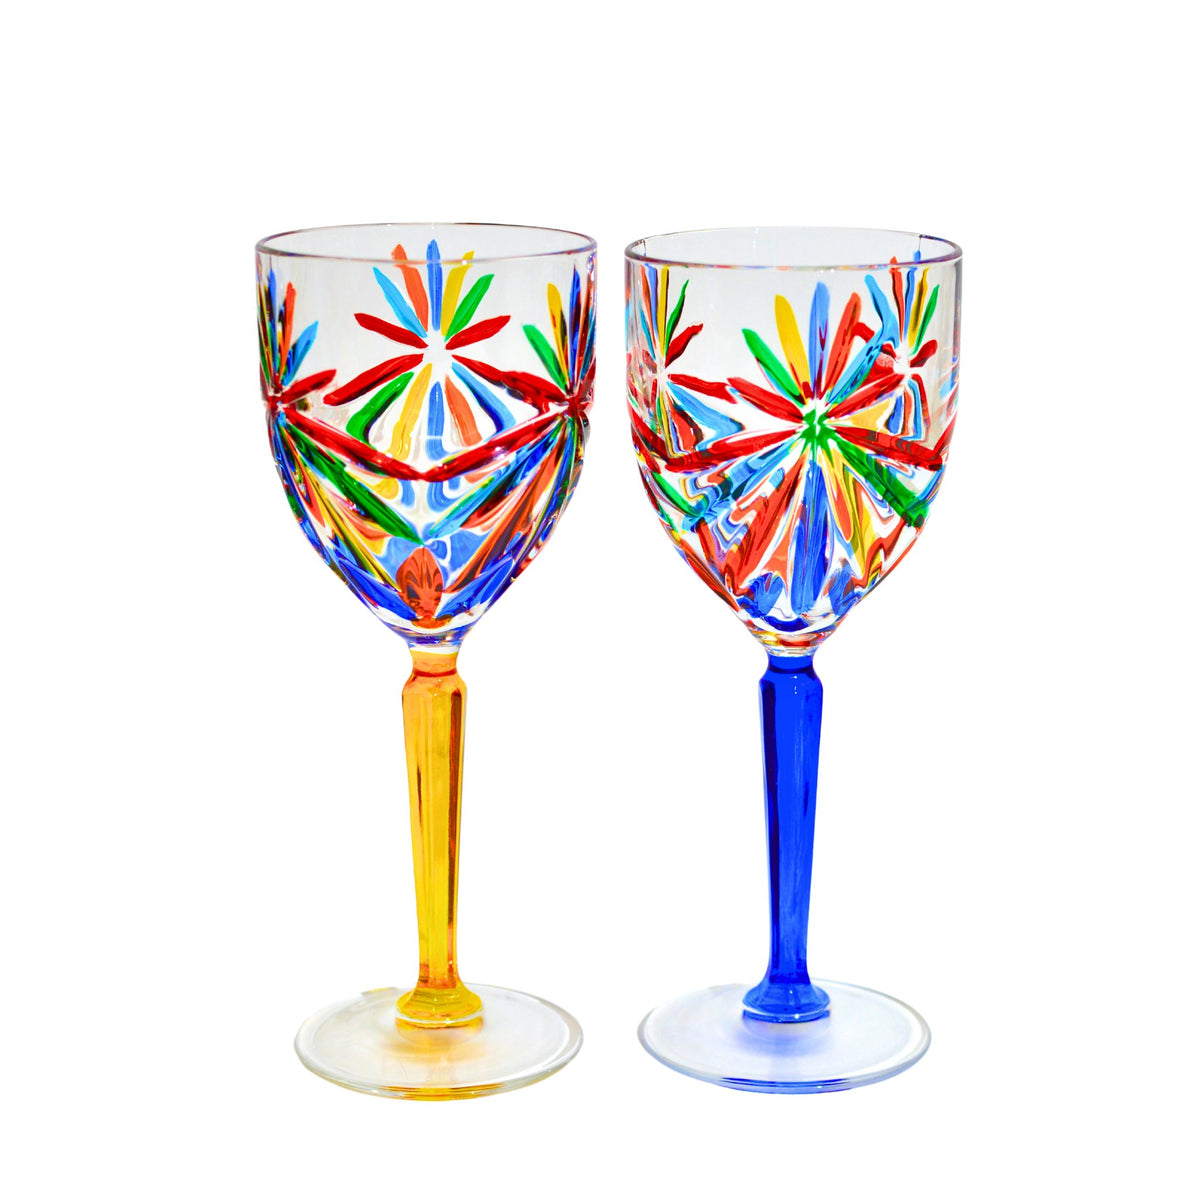 Starburst Wine Glasses, Hand-Painted Italian Crystal Goblets, Set of 2 - My Italian Decor